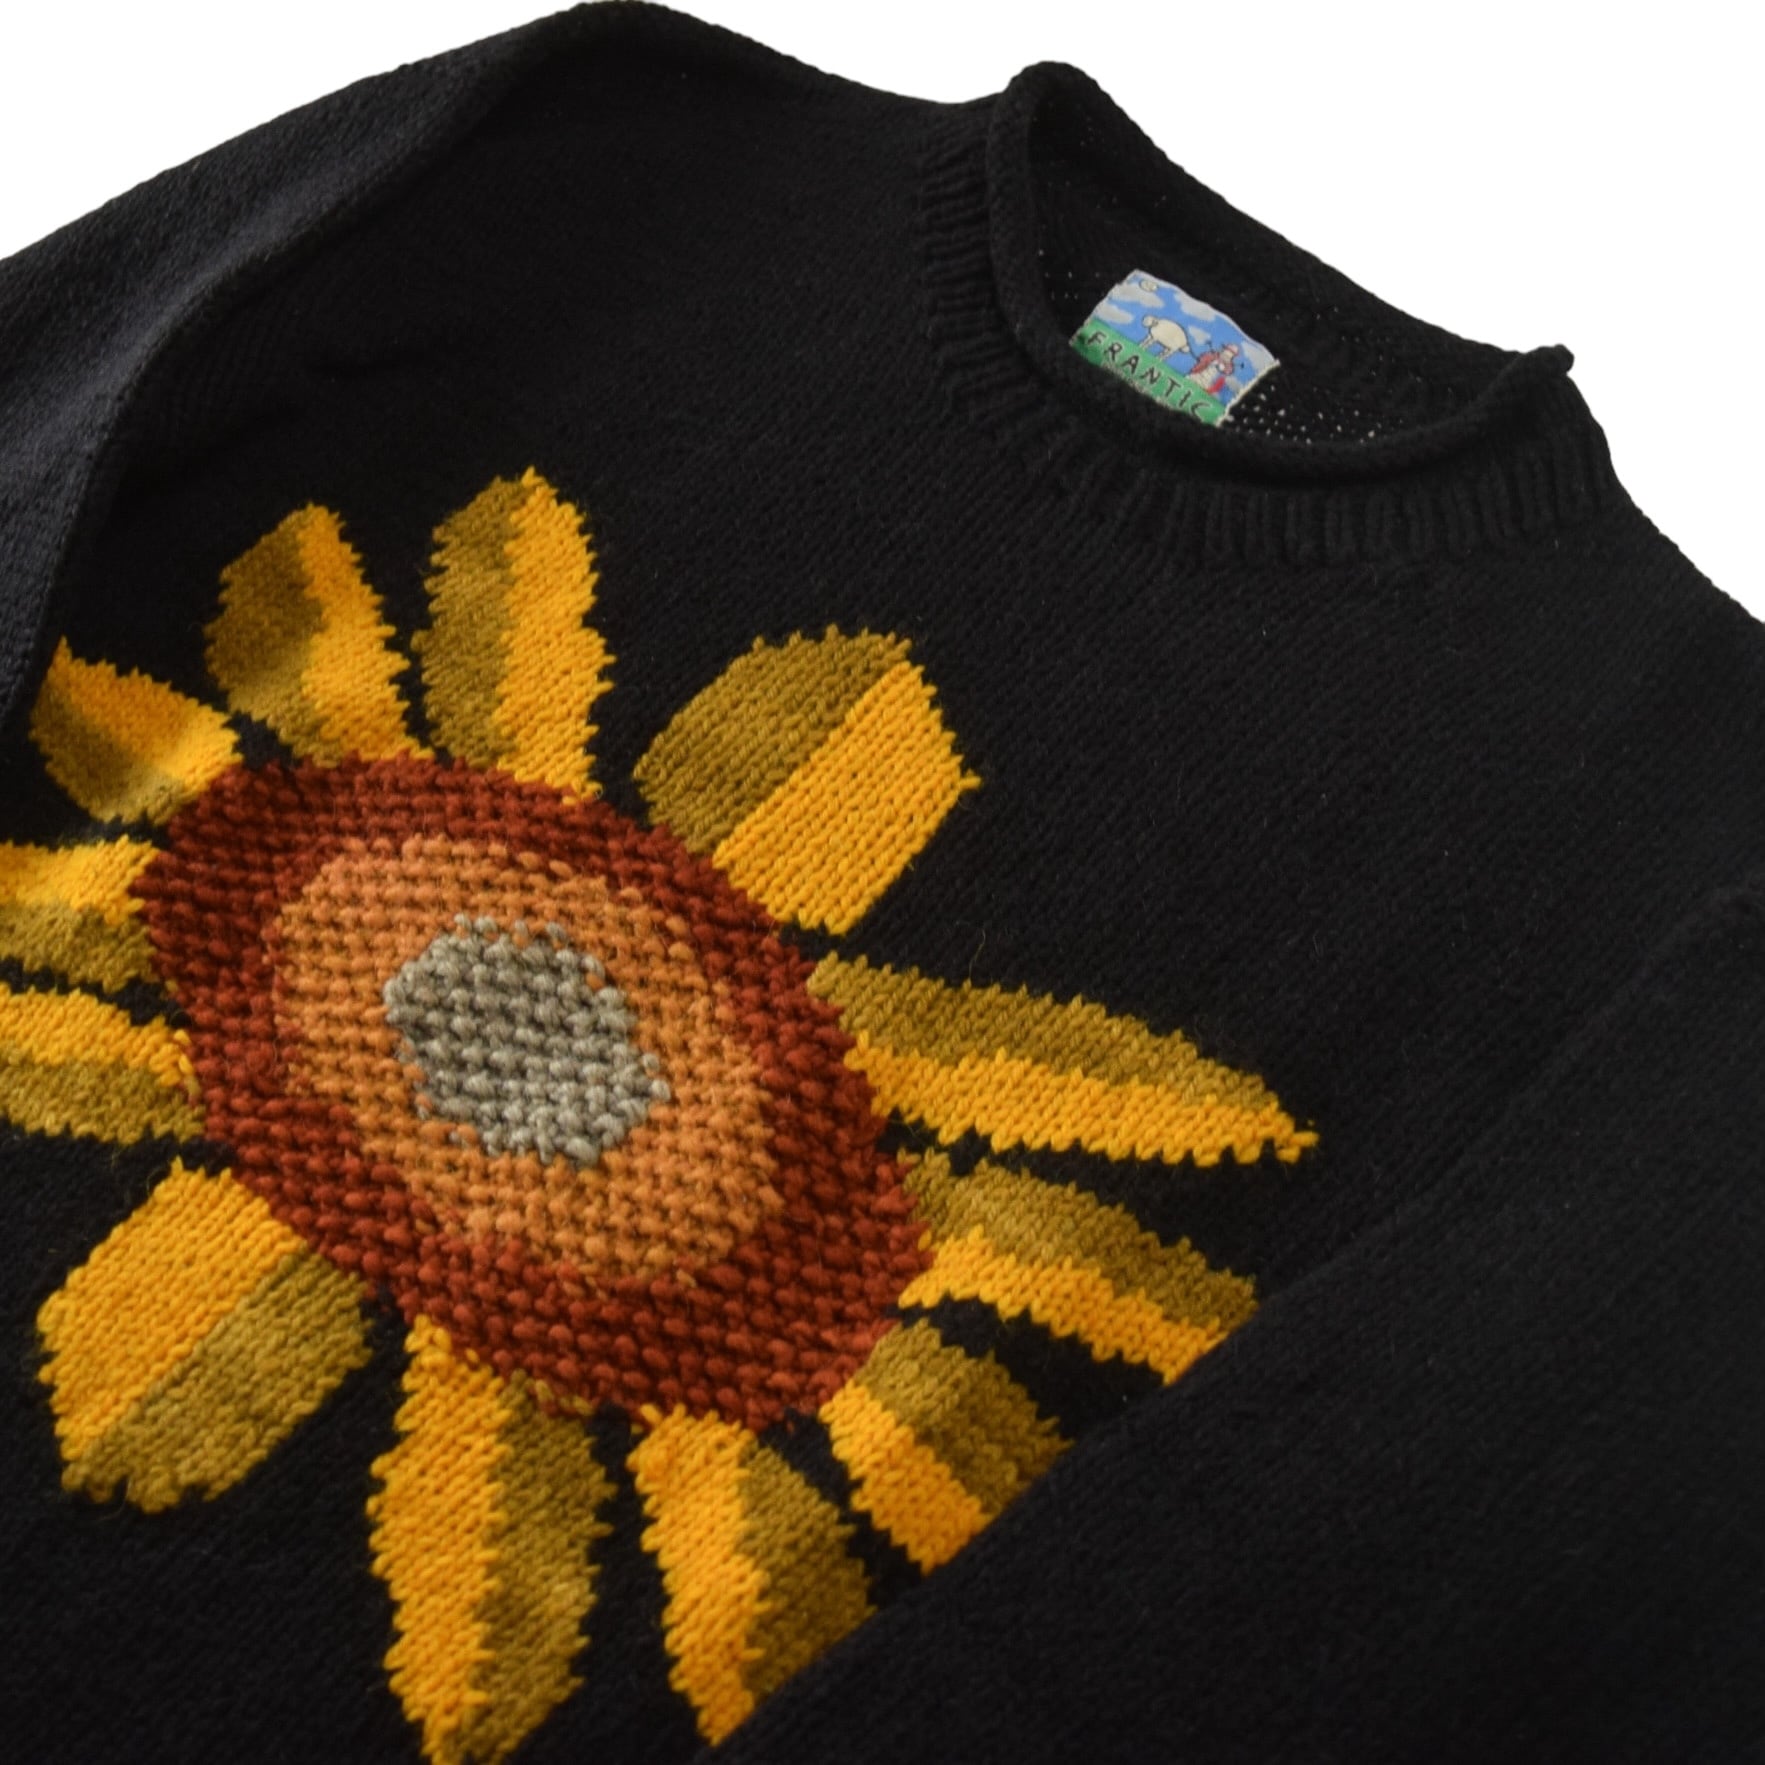 1980's Vintage Mock Neck Sun Flower Ecuador Knit Sweater XL Black / 80年代  ヴィンテージ エクアドルニット サンフラワーニットセーター 両面 ブラック ビンテージ 花柄 モックネック ヒマワリ